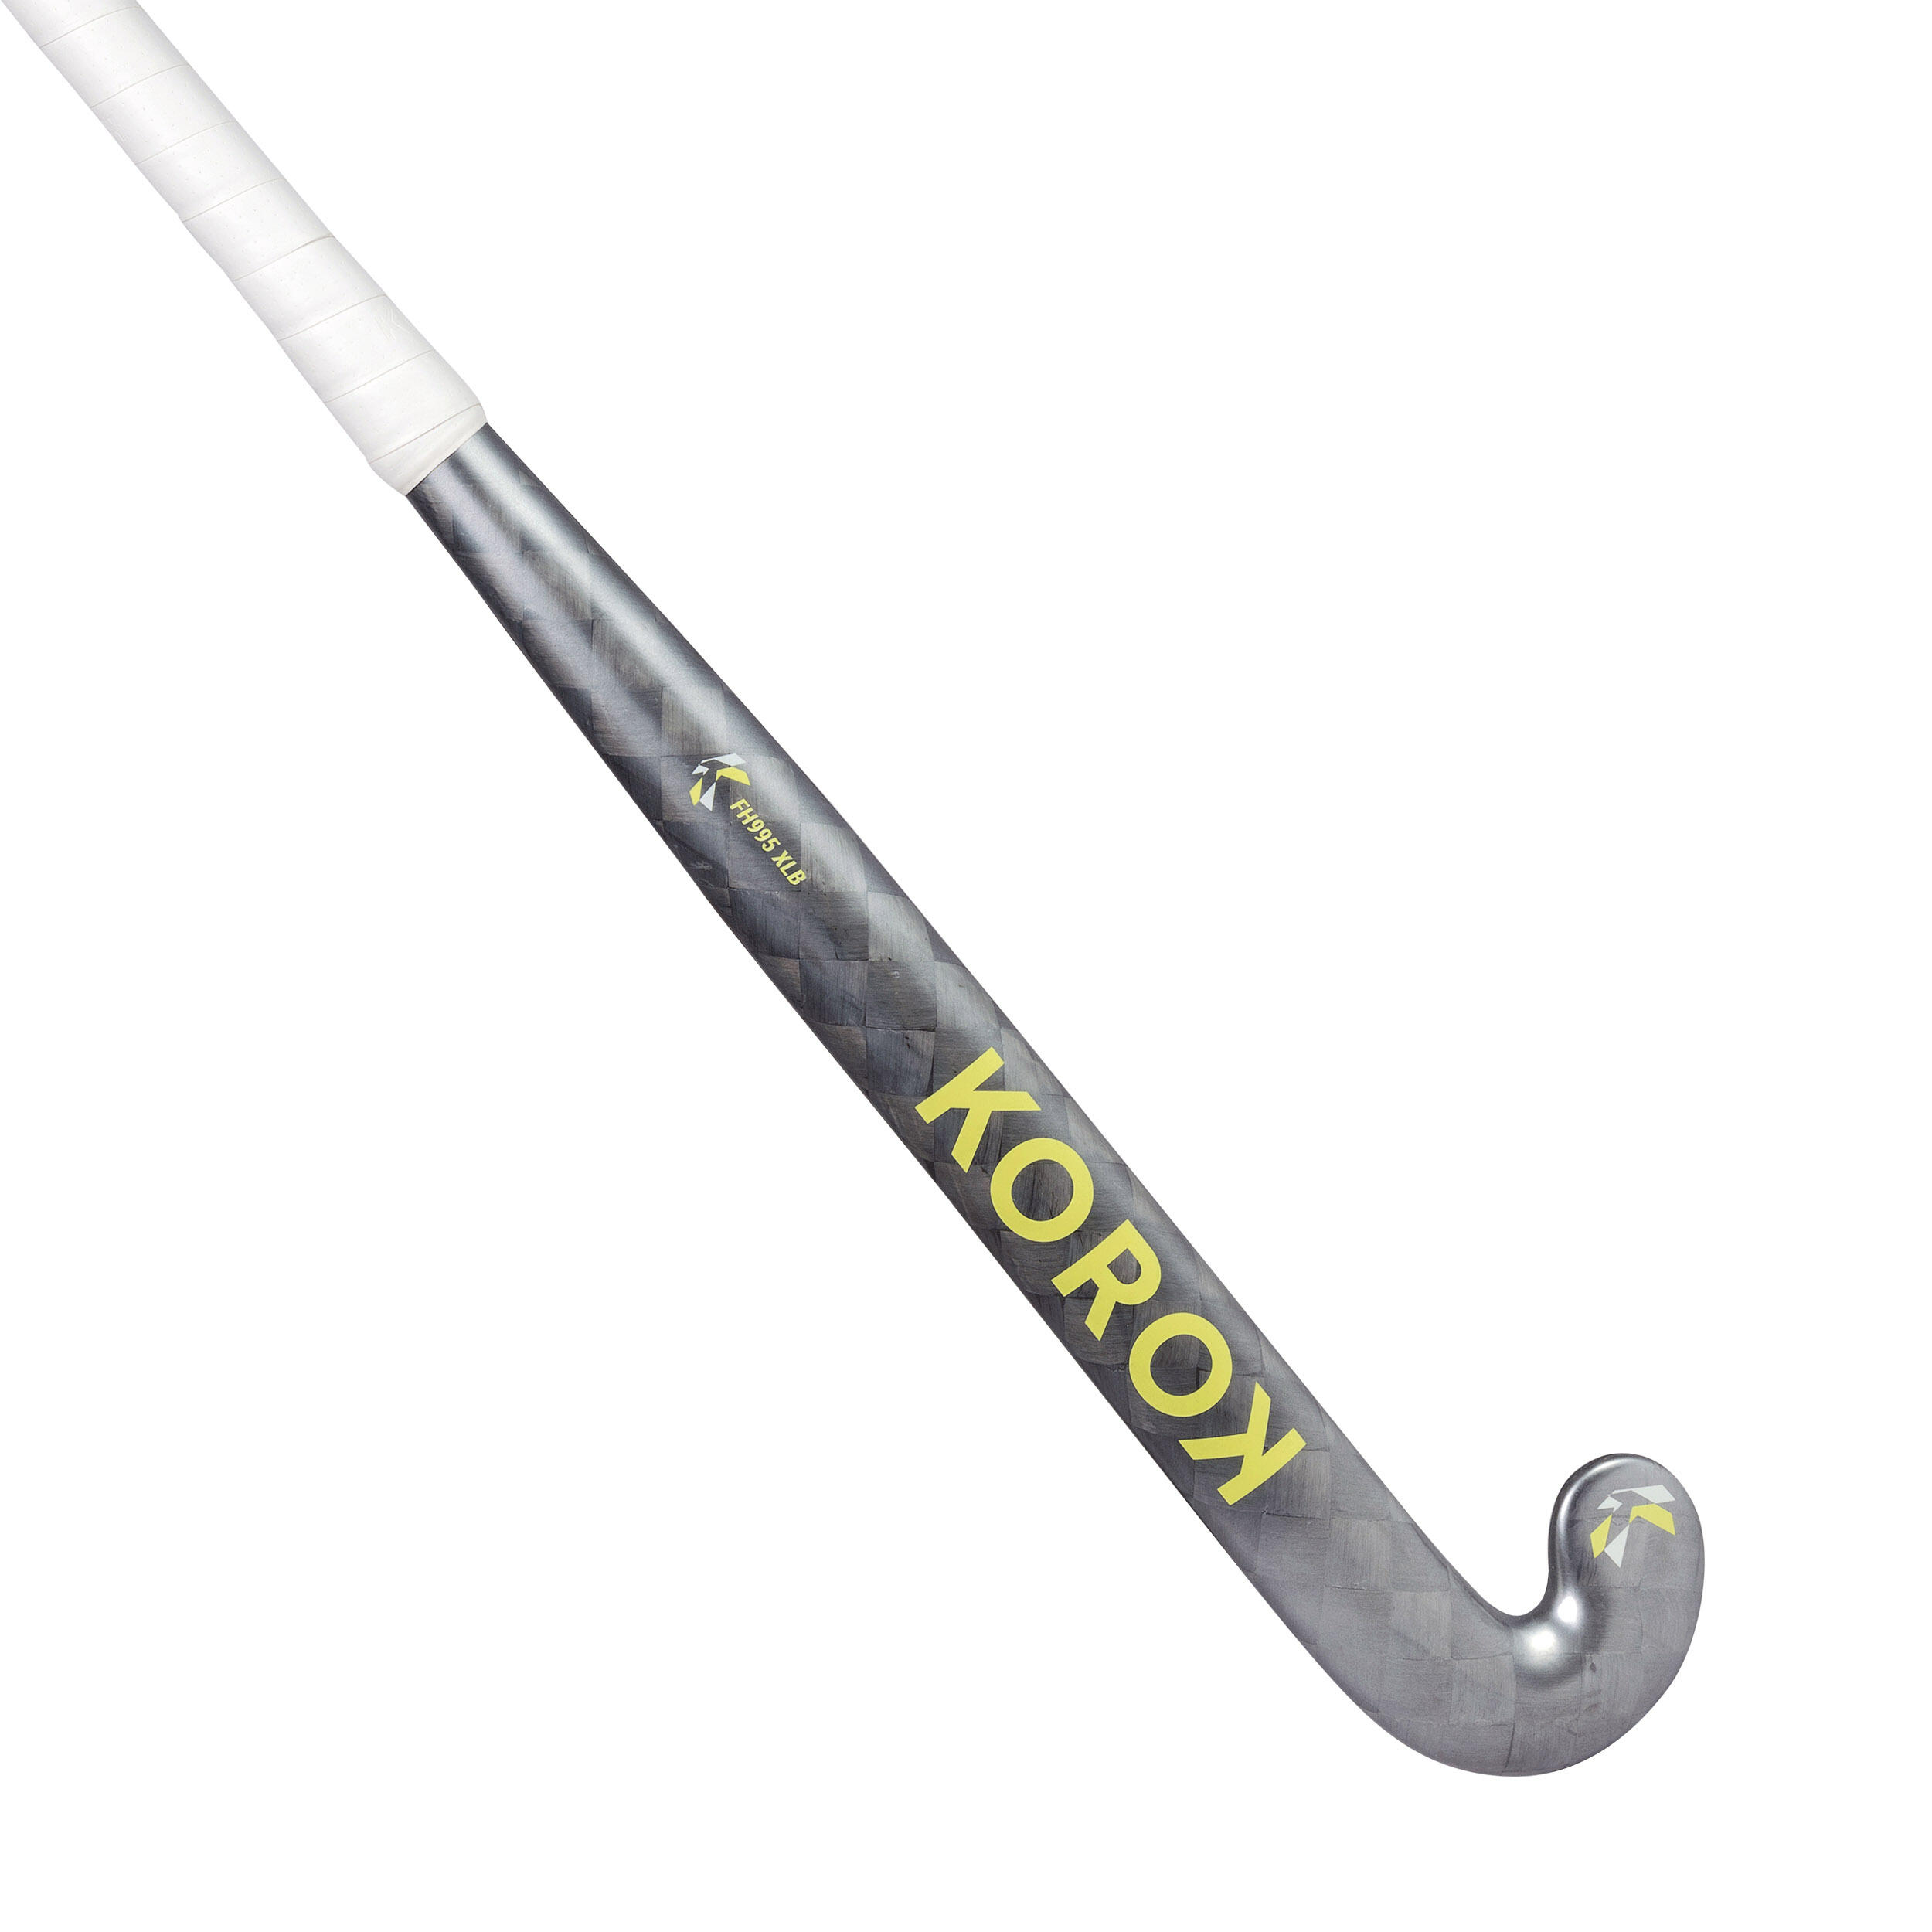 KOROK Adult Advanced 95% Carbon Extra Low Bow Field Hockey Stick FH995 - Grey/Yellow